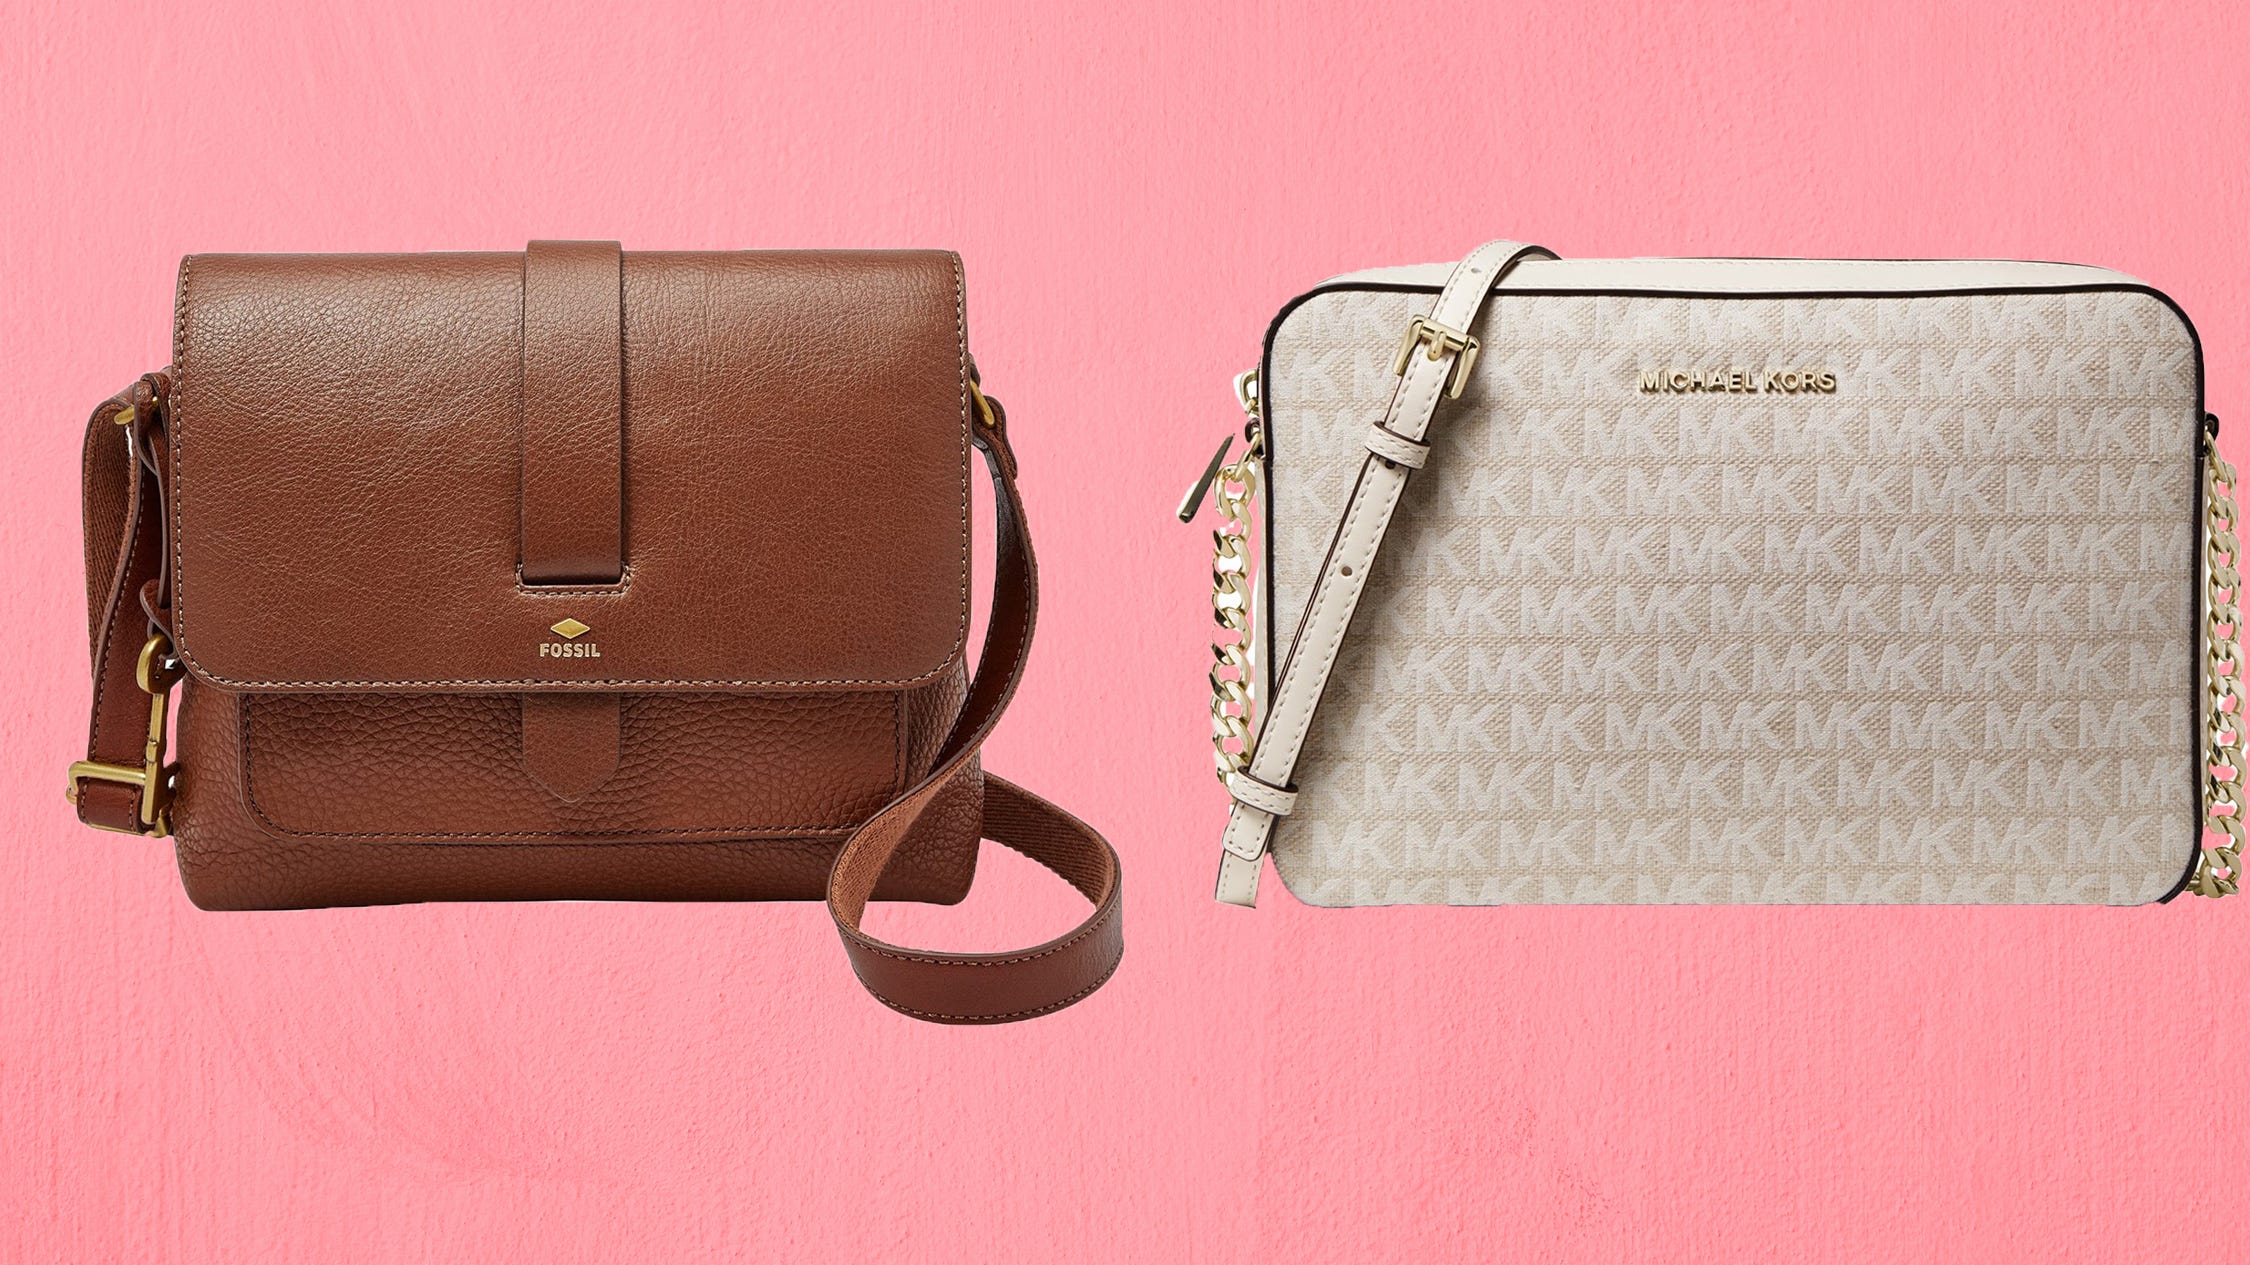 handbags sale: Shop designer purses 